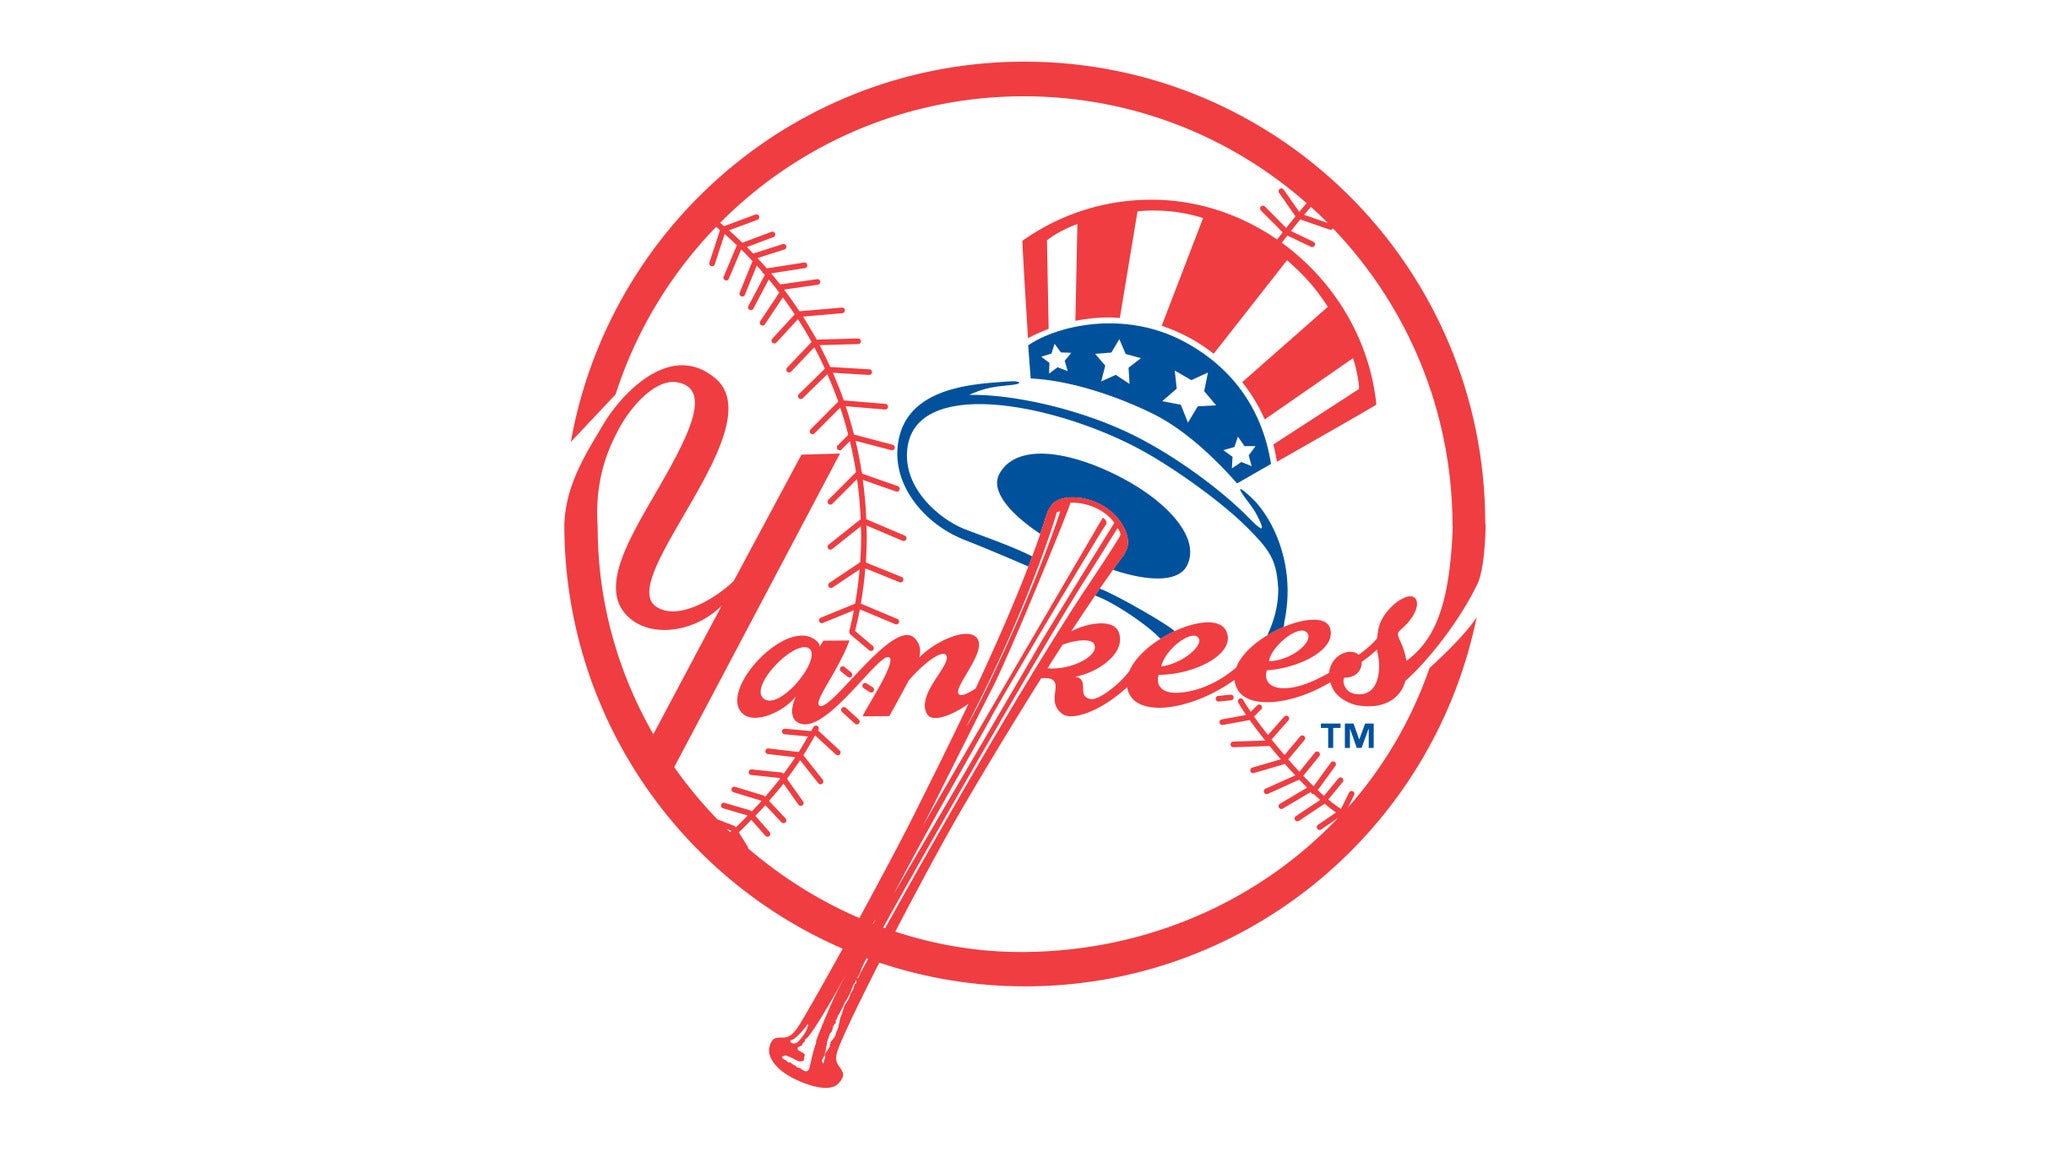 New York Yankees v. Seattle Mariners * Premium Seating